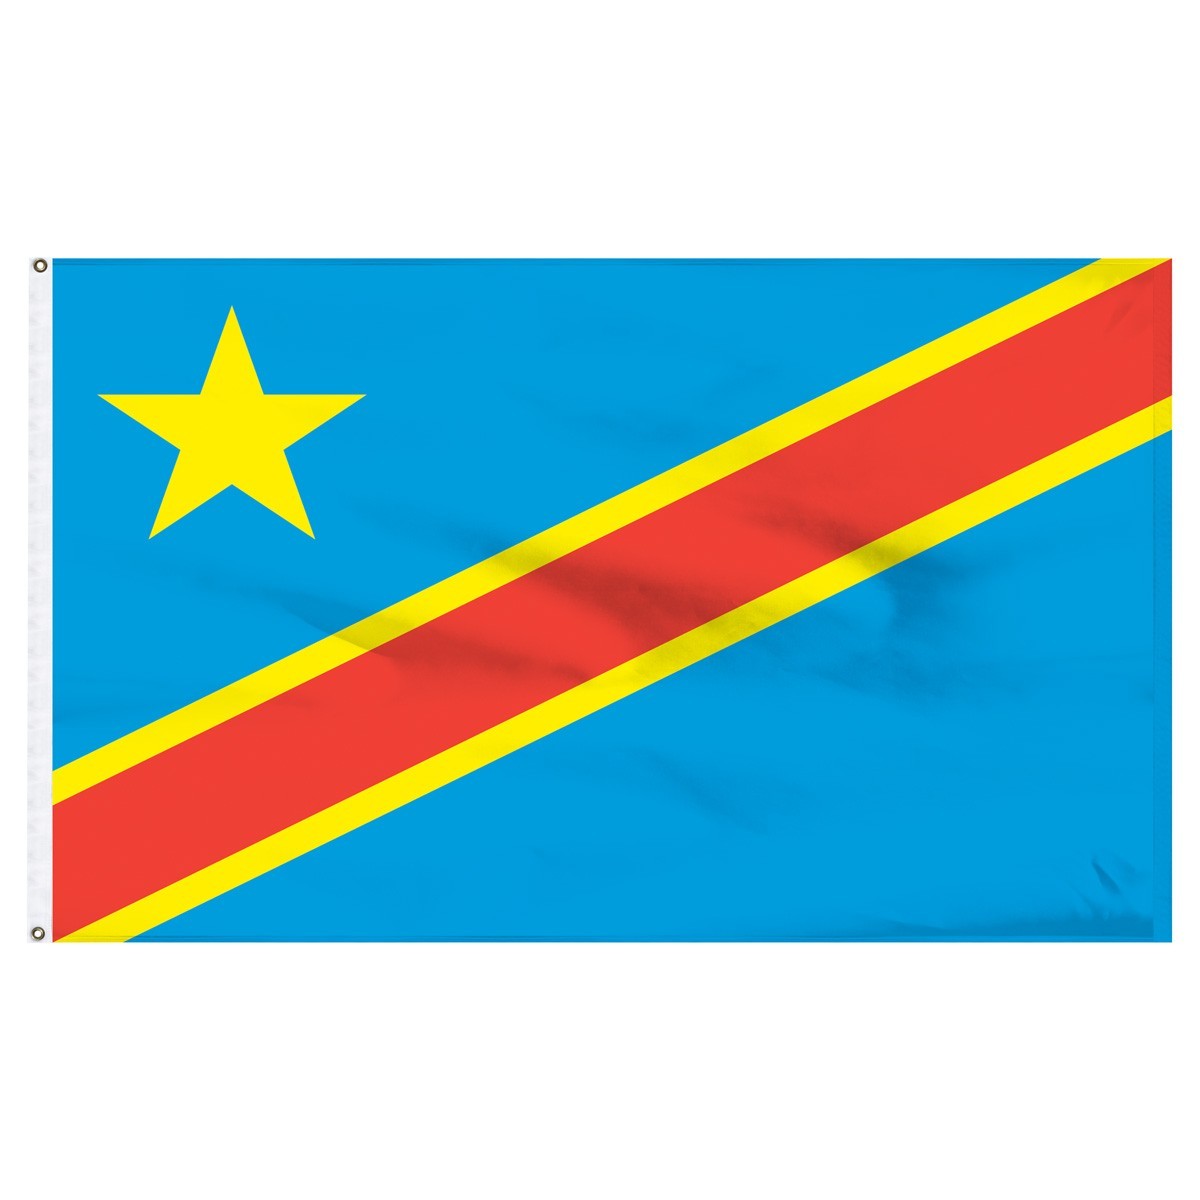 Democratic Republic of Congo flags for sale.